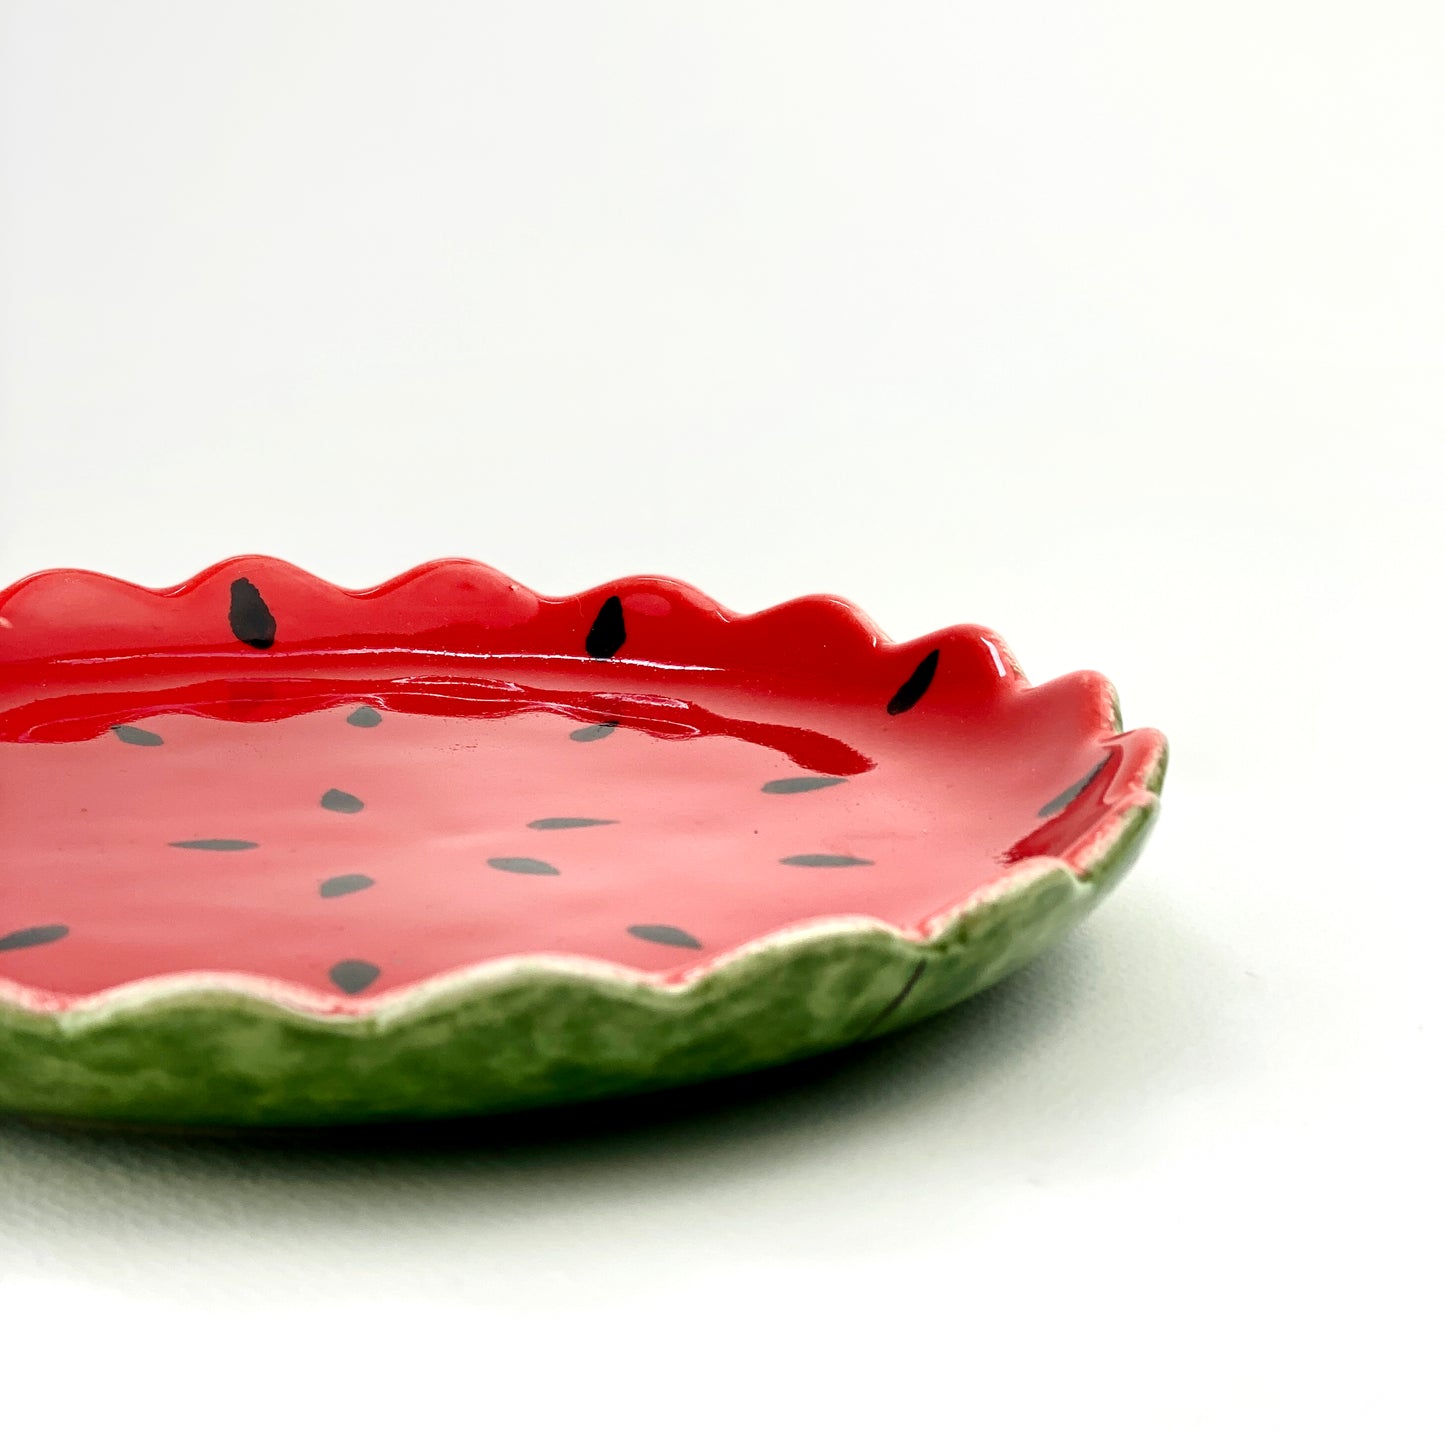 Ceramic Watermelon Plate | Hand Made Watermelon Plate